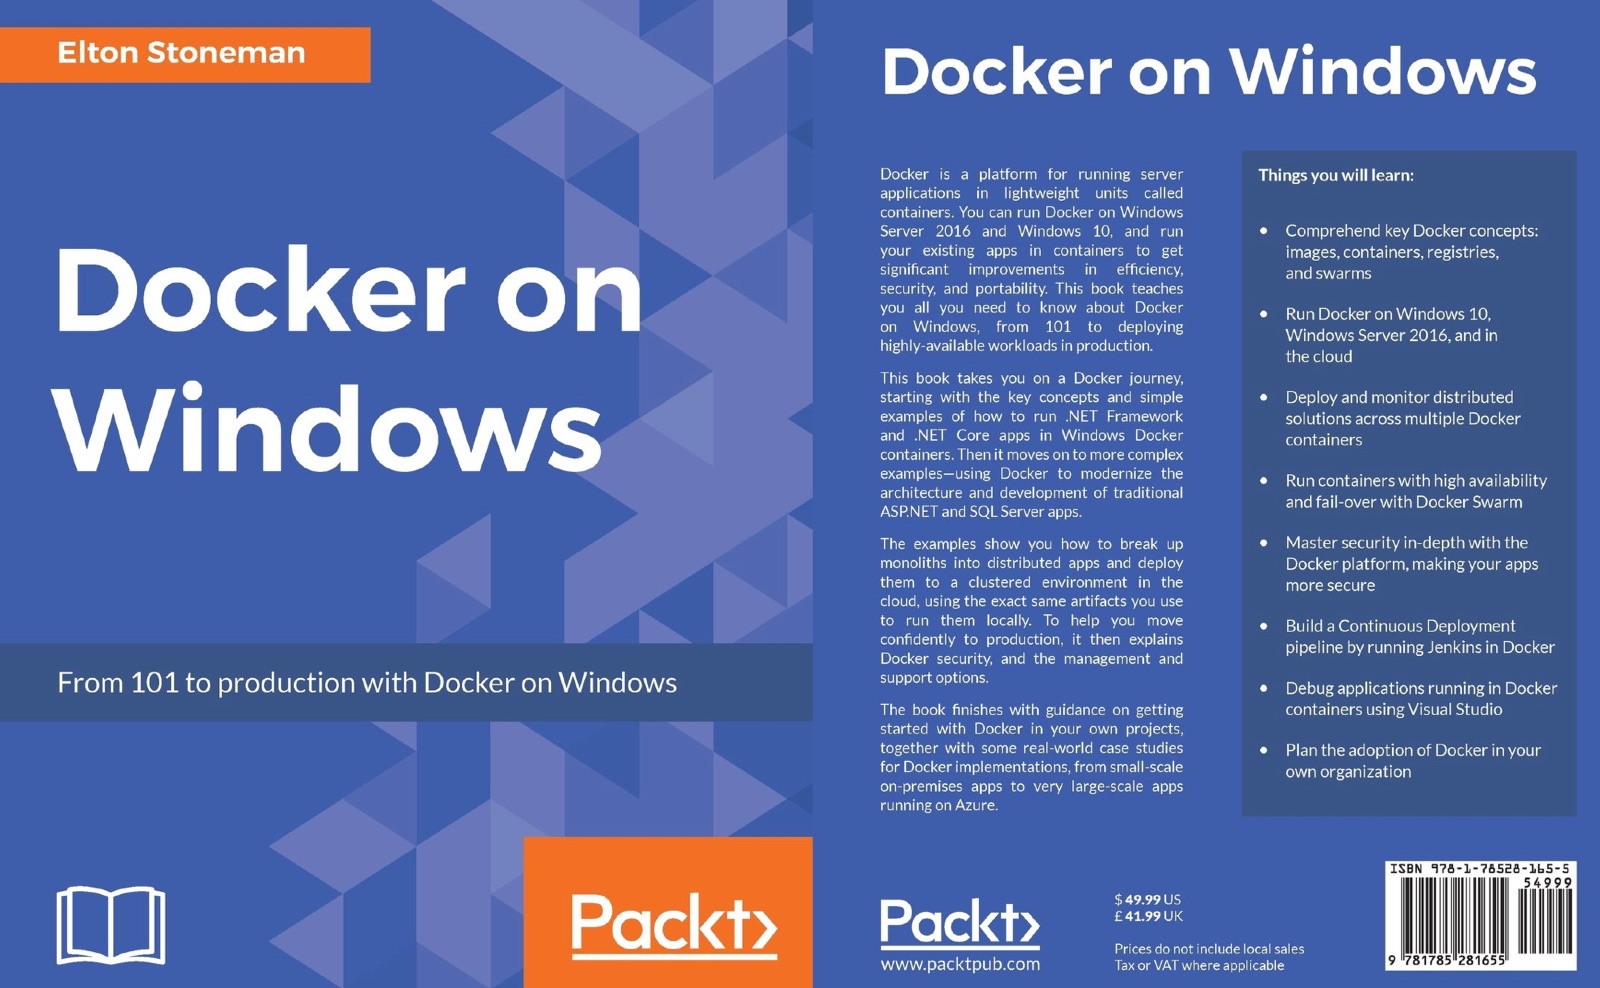 Docker on Windows by Elton Stoneman, cover page